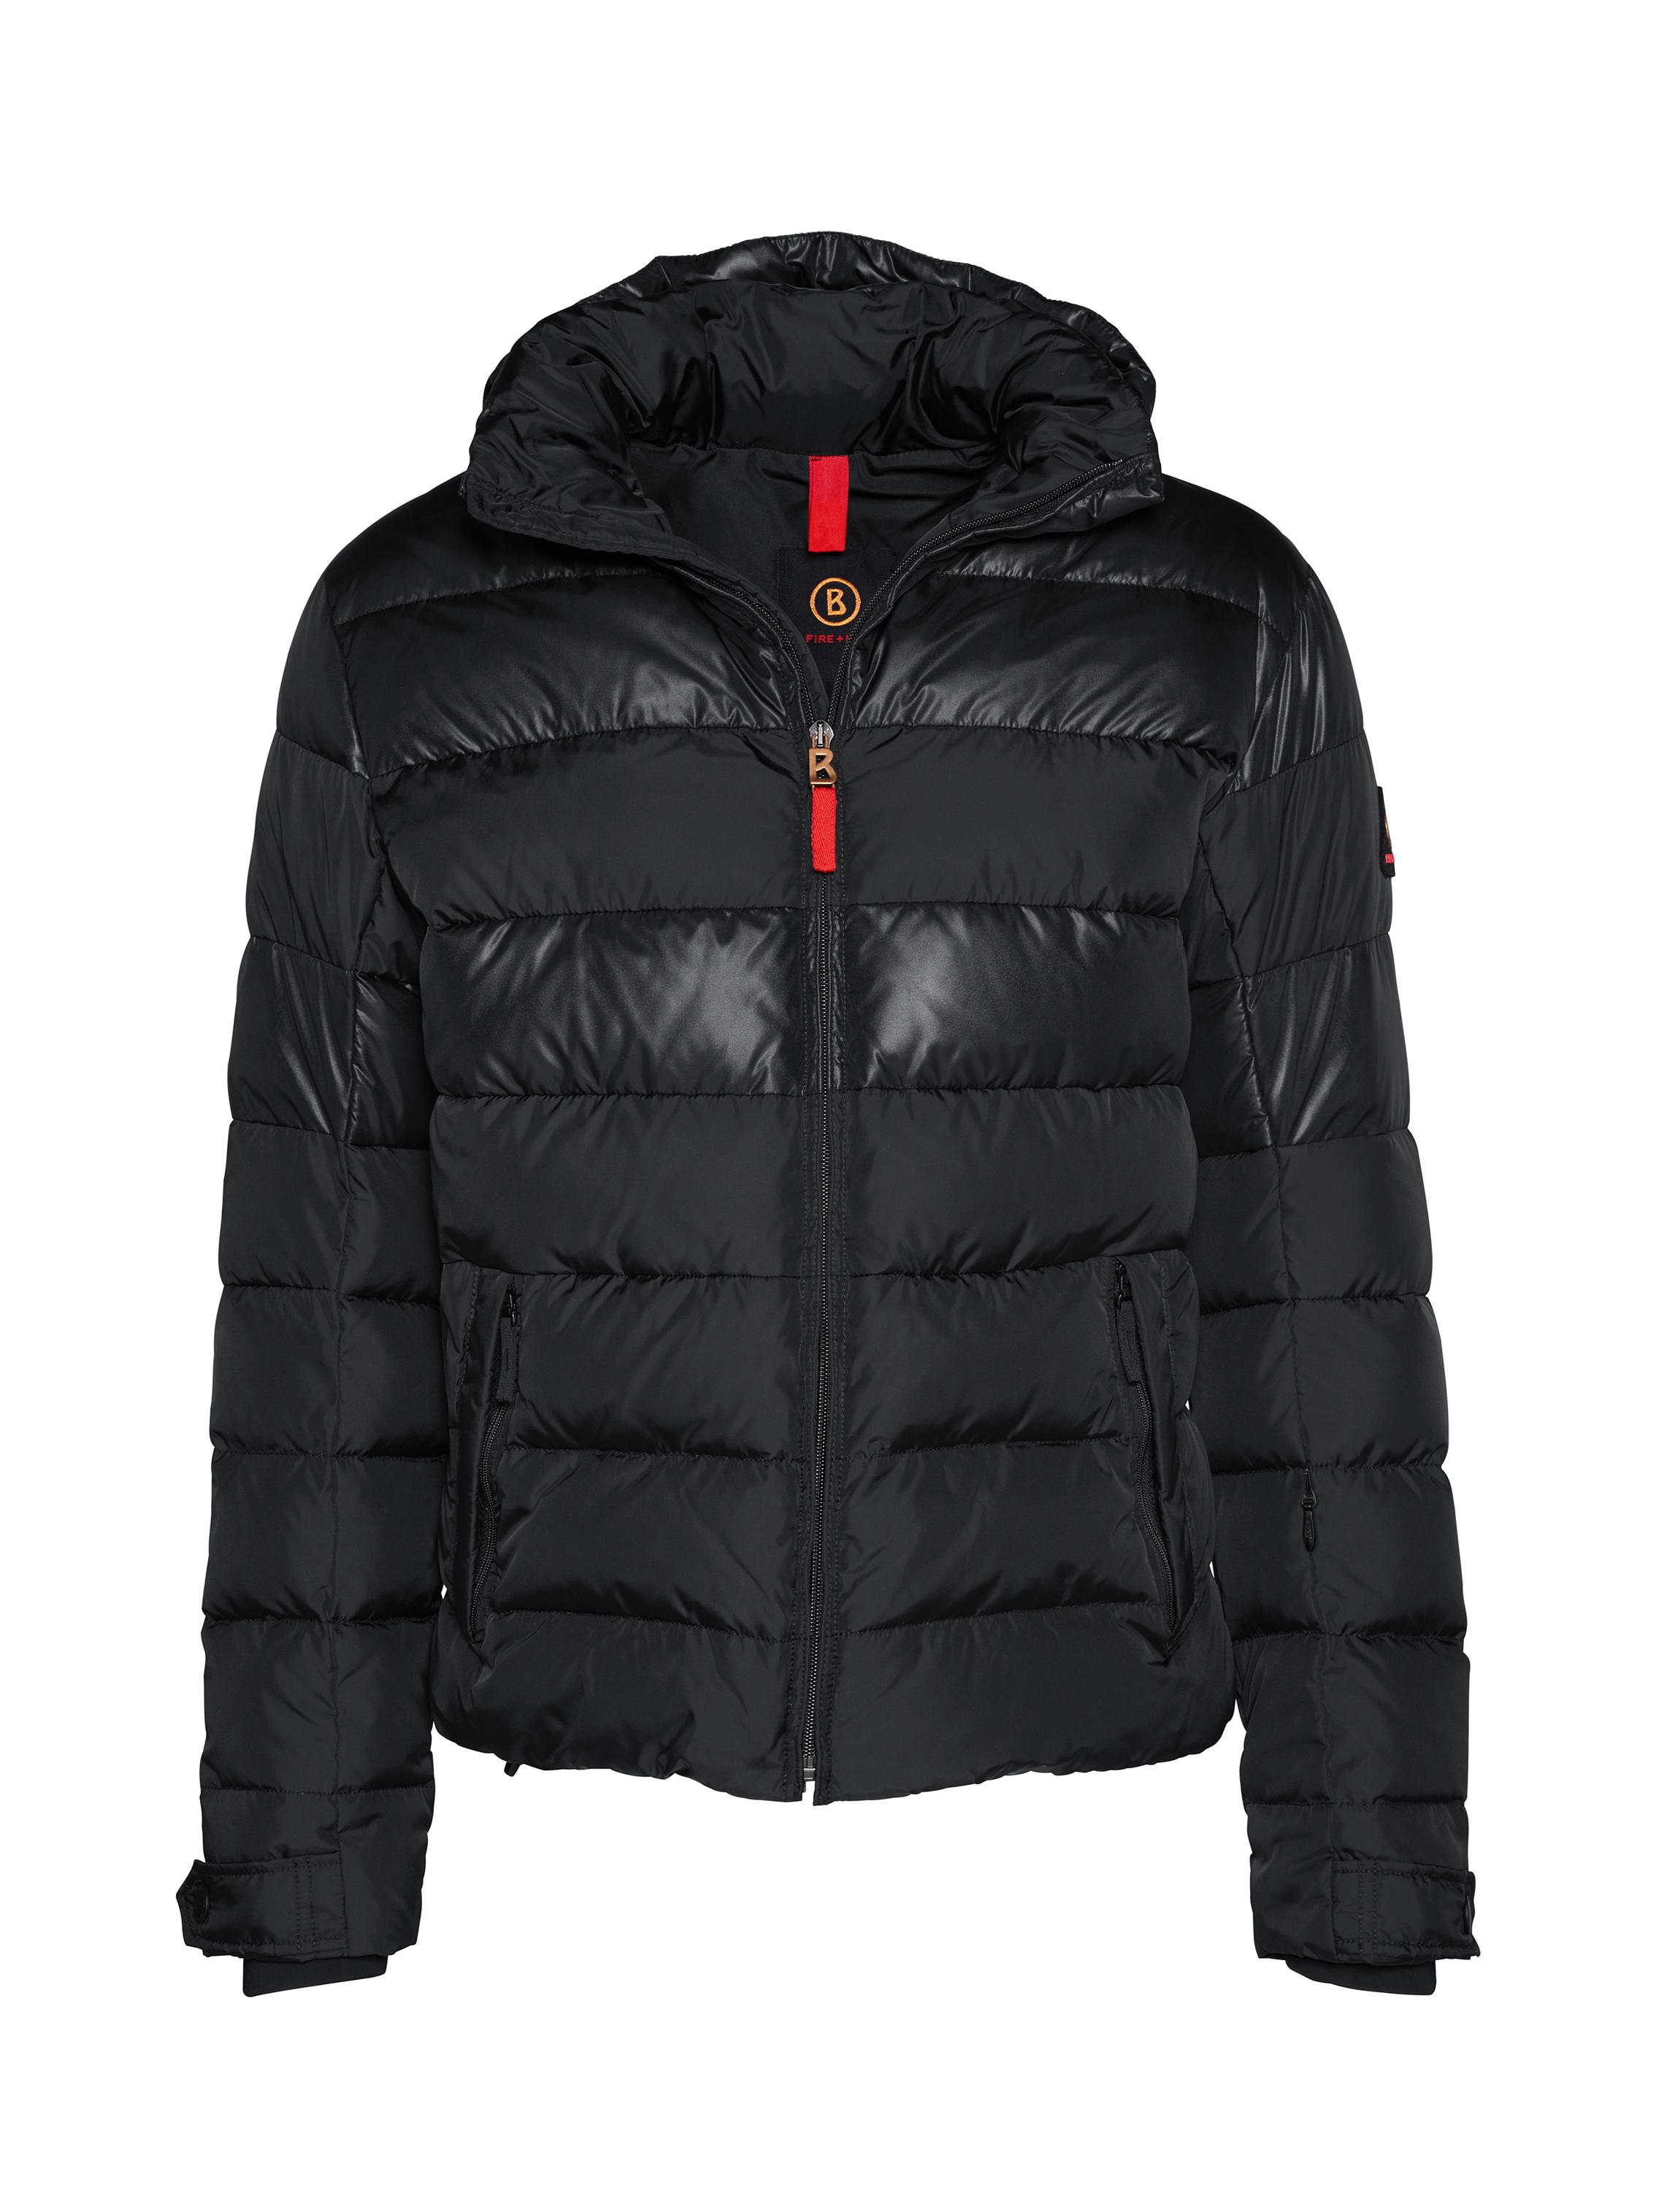 Bogner Synthetic Ski Down Jacket Lars3 in Black for Men - Lyst